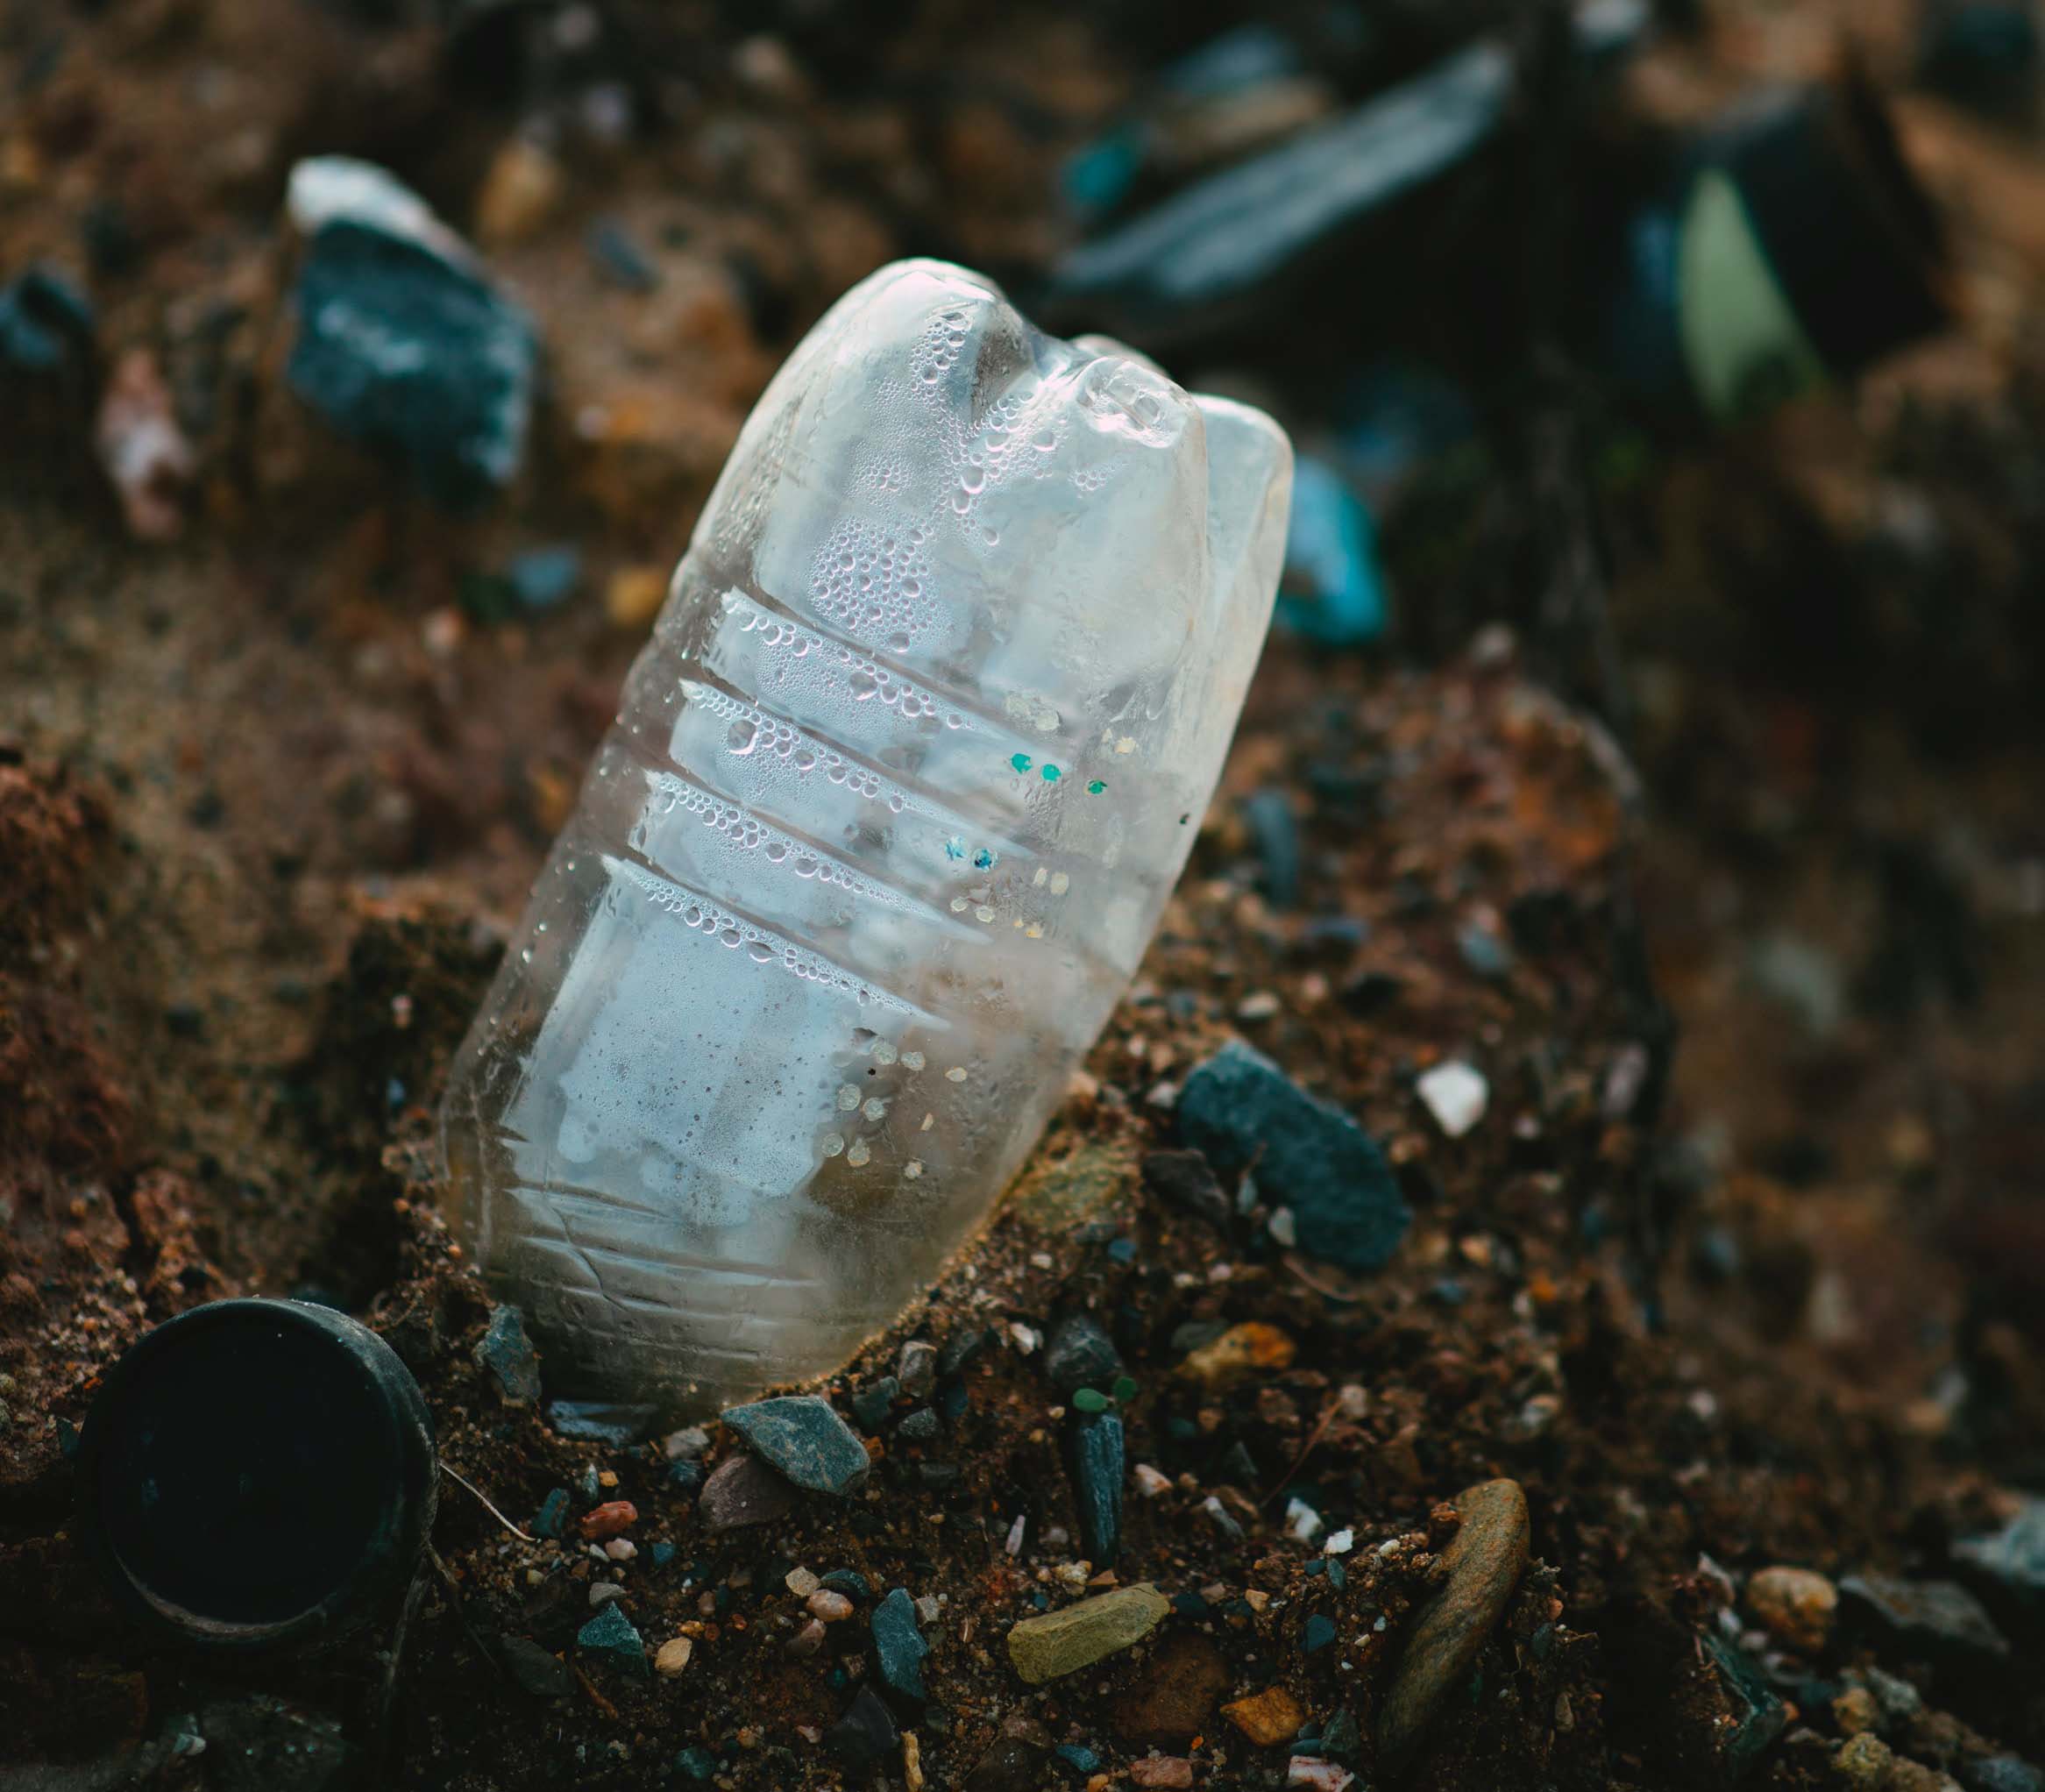 Trash to Treasure: REUSE Creates Feedstock from Plastic Waste - Plastic Water Bottle